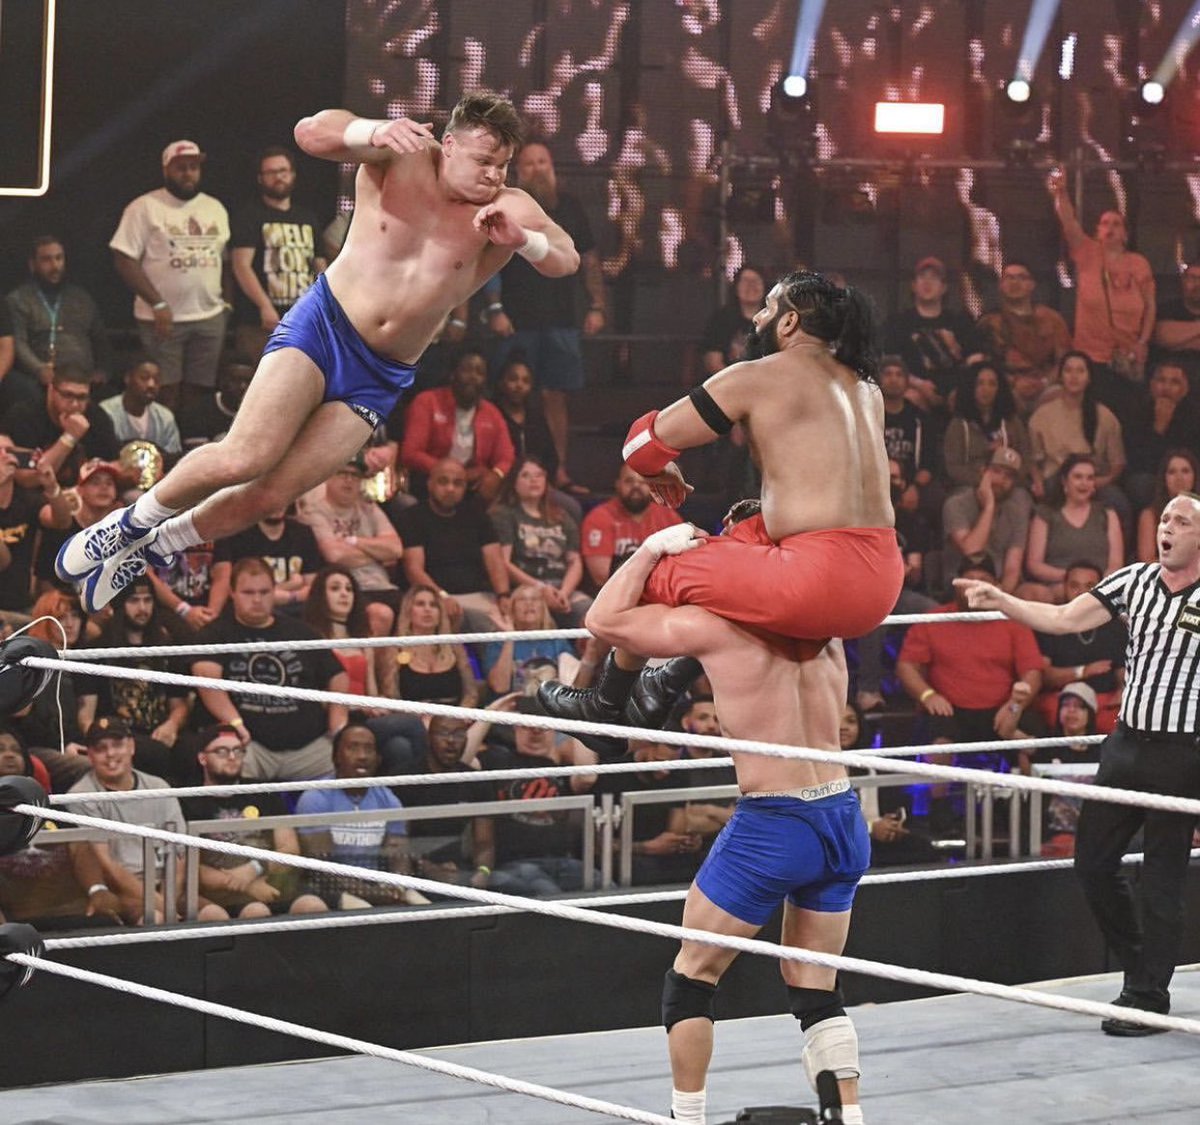 Brutus Ball ☄️

#WWENXT  #NXTRoadblock